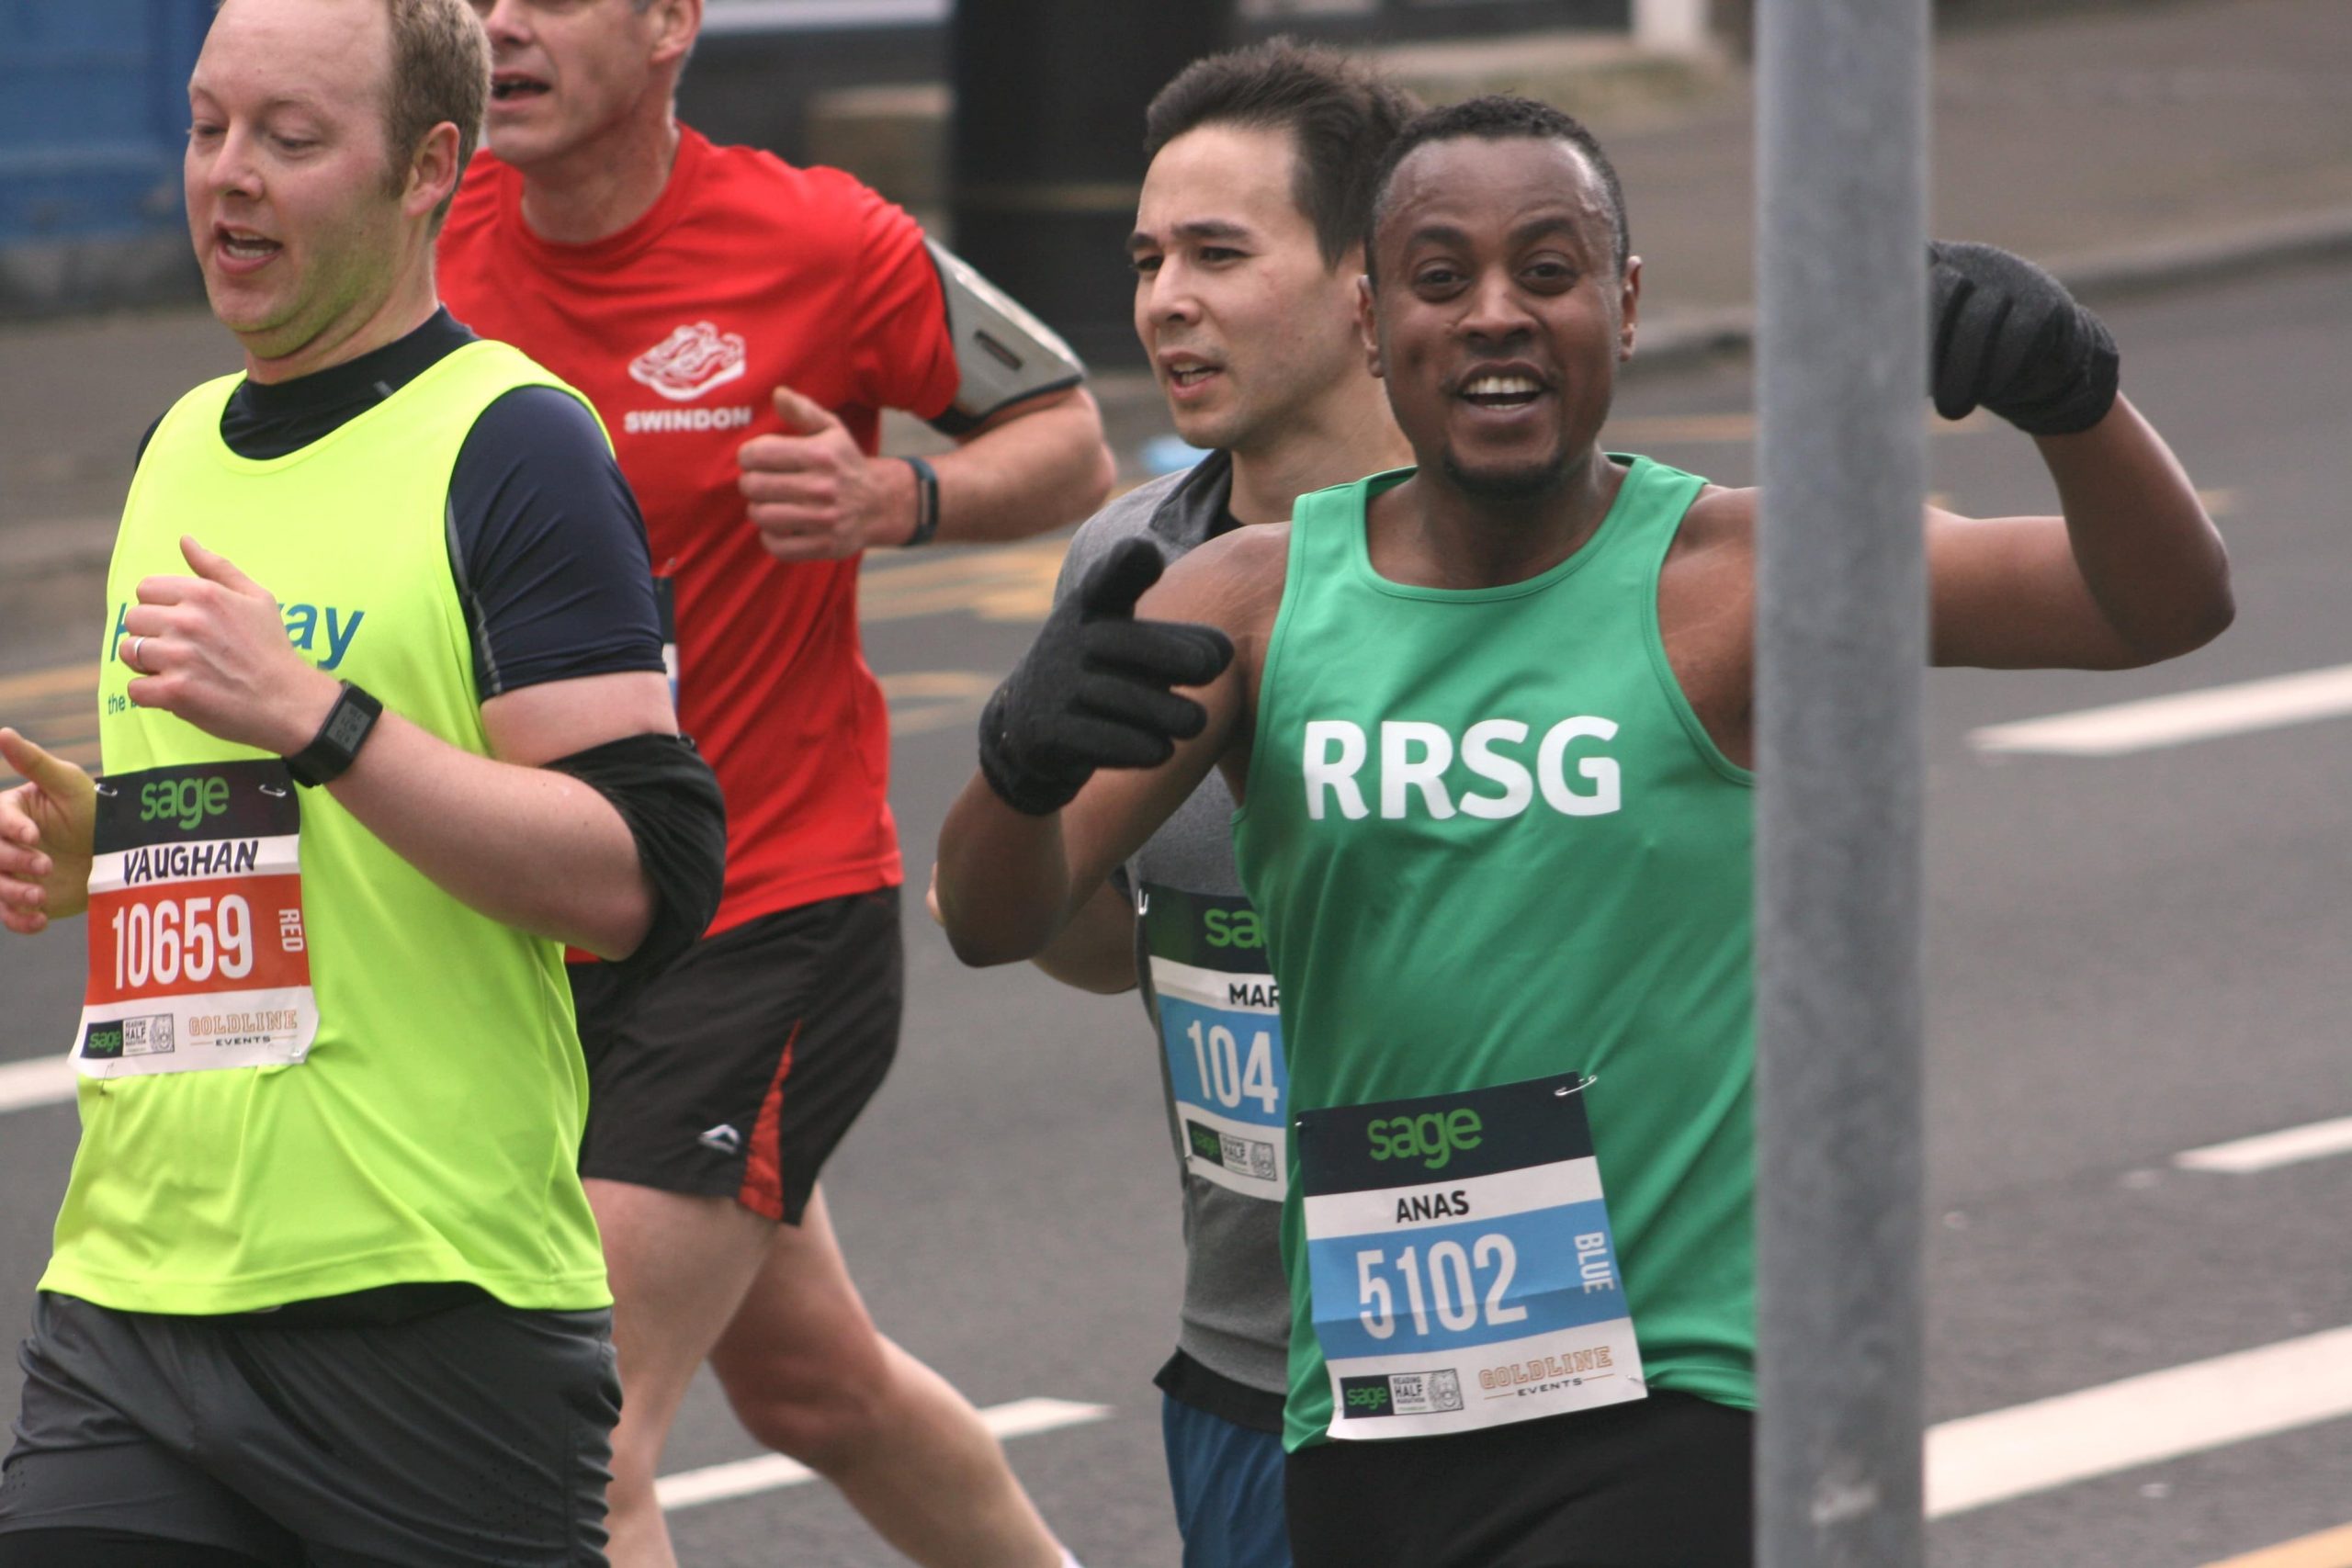 Smiling runner in Reading Refugee Support Group vest